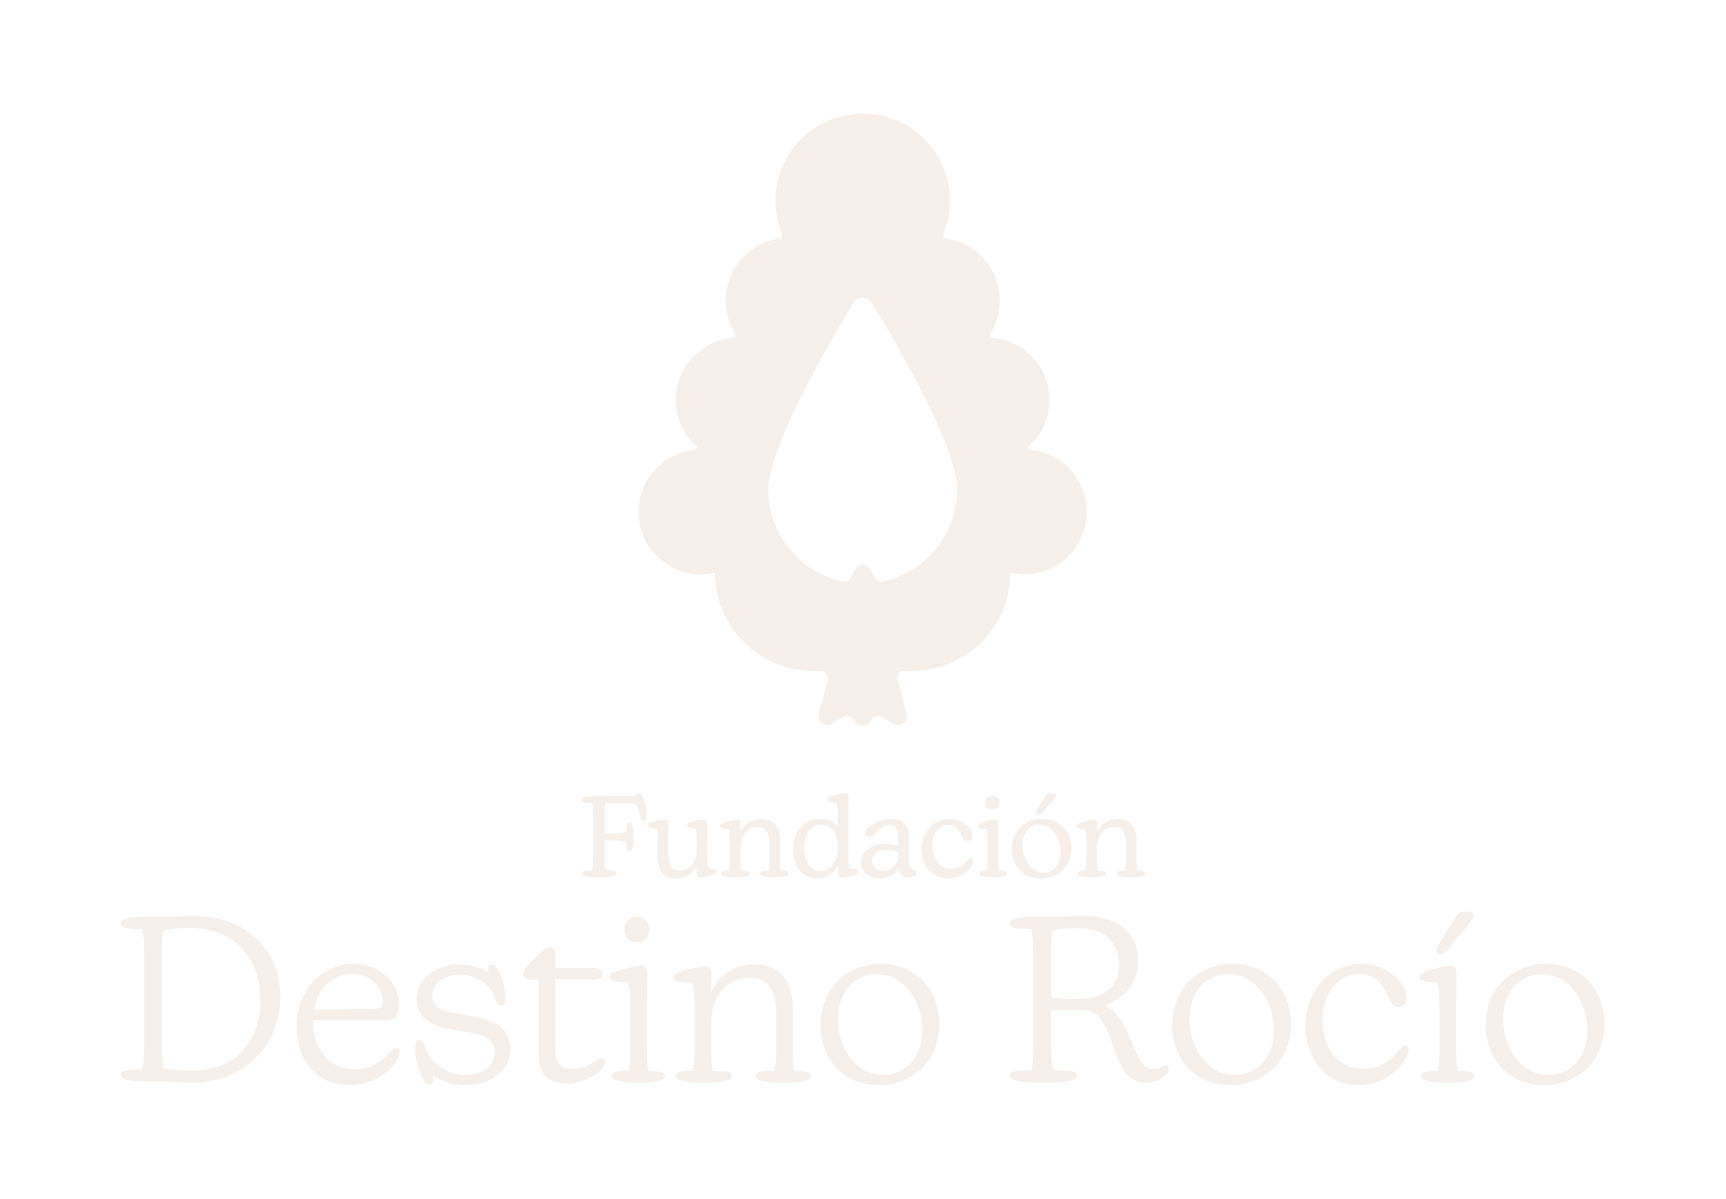 Fundacion Destino Rocio Sin Claim Vertical RGB Negative